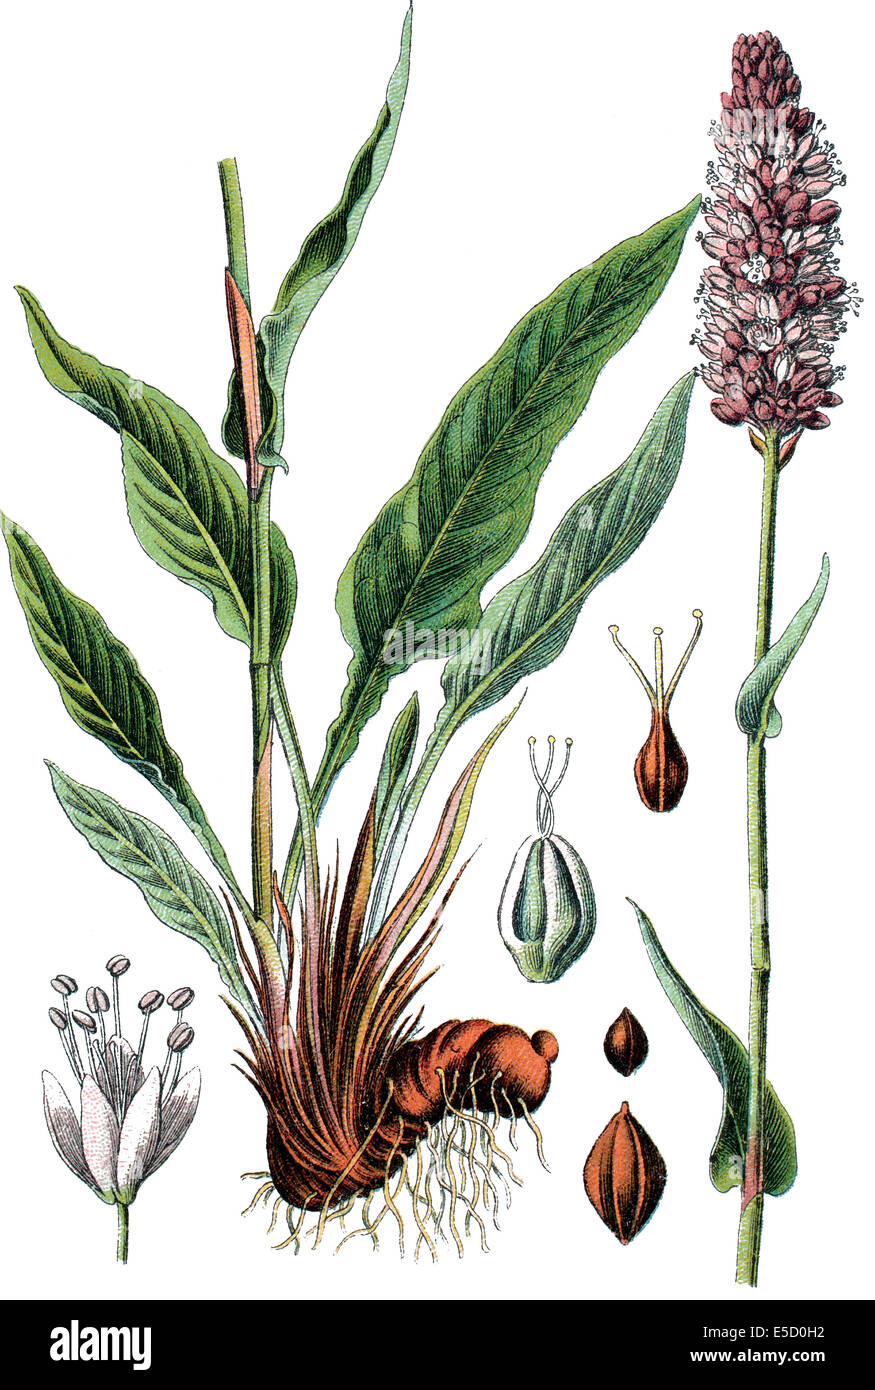 bistort or European bistort, Bistorta officinalis Syn.: Persicaria bistorta  L. Samp., Polygonum bistorta L., Bistorta major S.F Stock Photo - Alamy